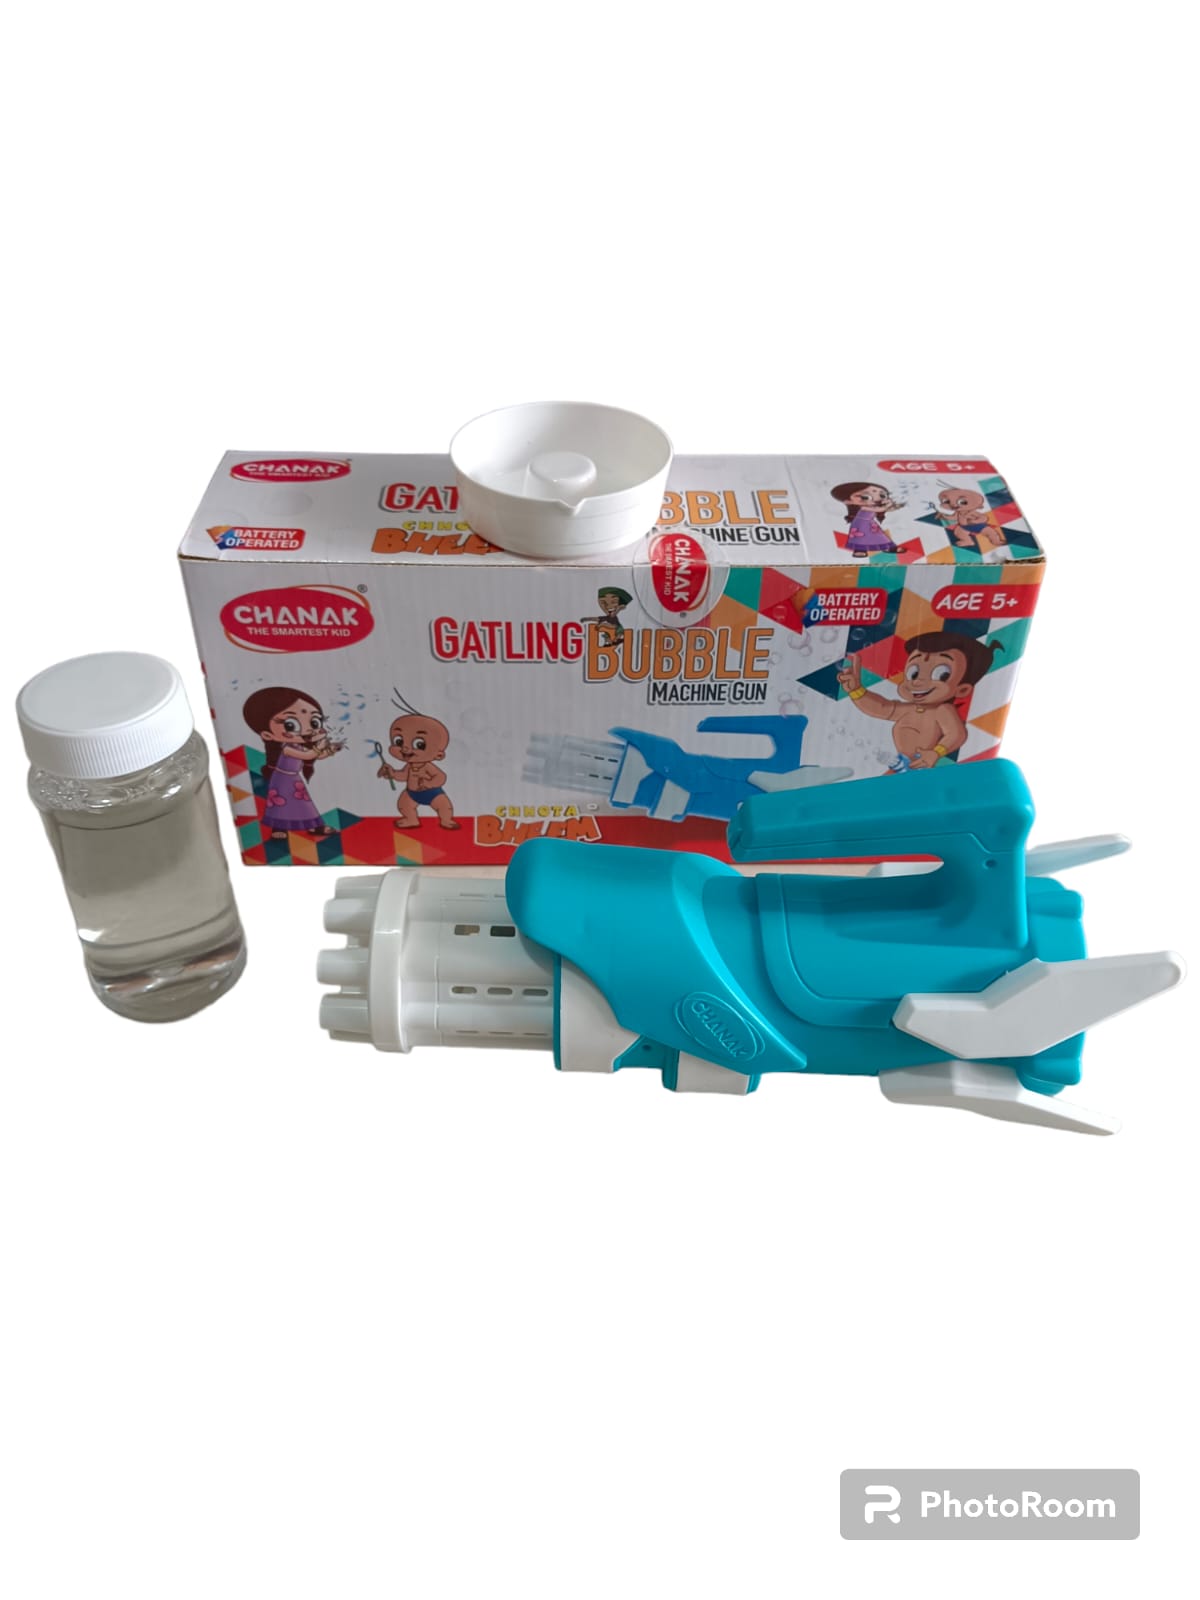 Gatling Bubble Gun for Kids, Bubble Maker Toy for Kids,100% Safe & Skin Friendly Toy Bubble Maker